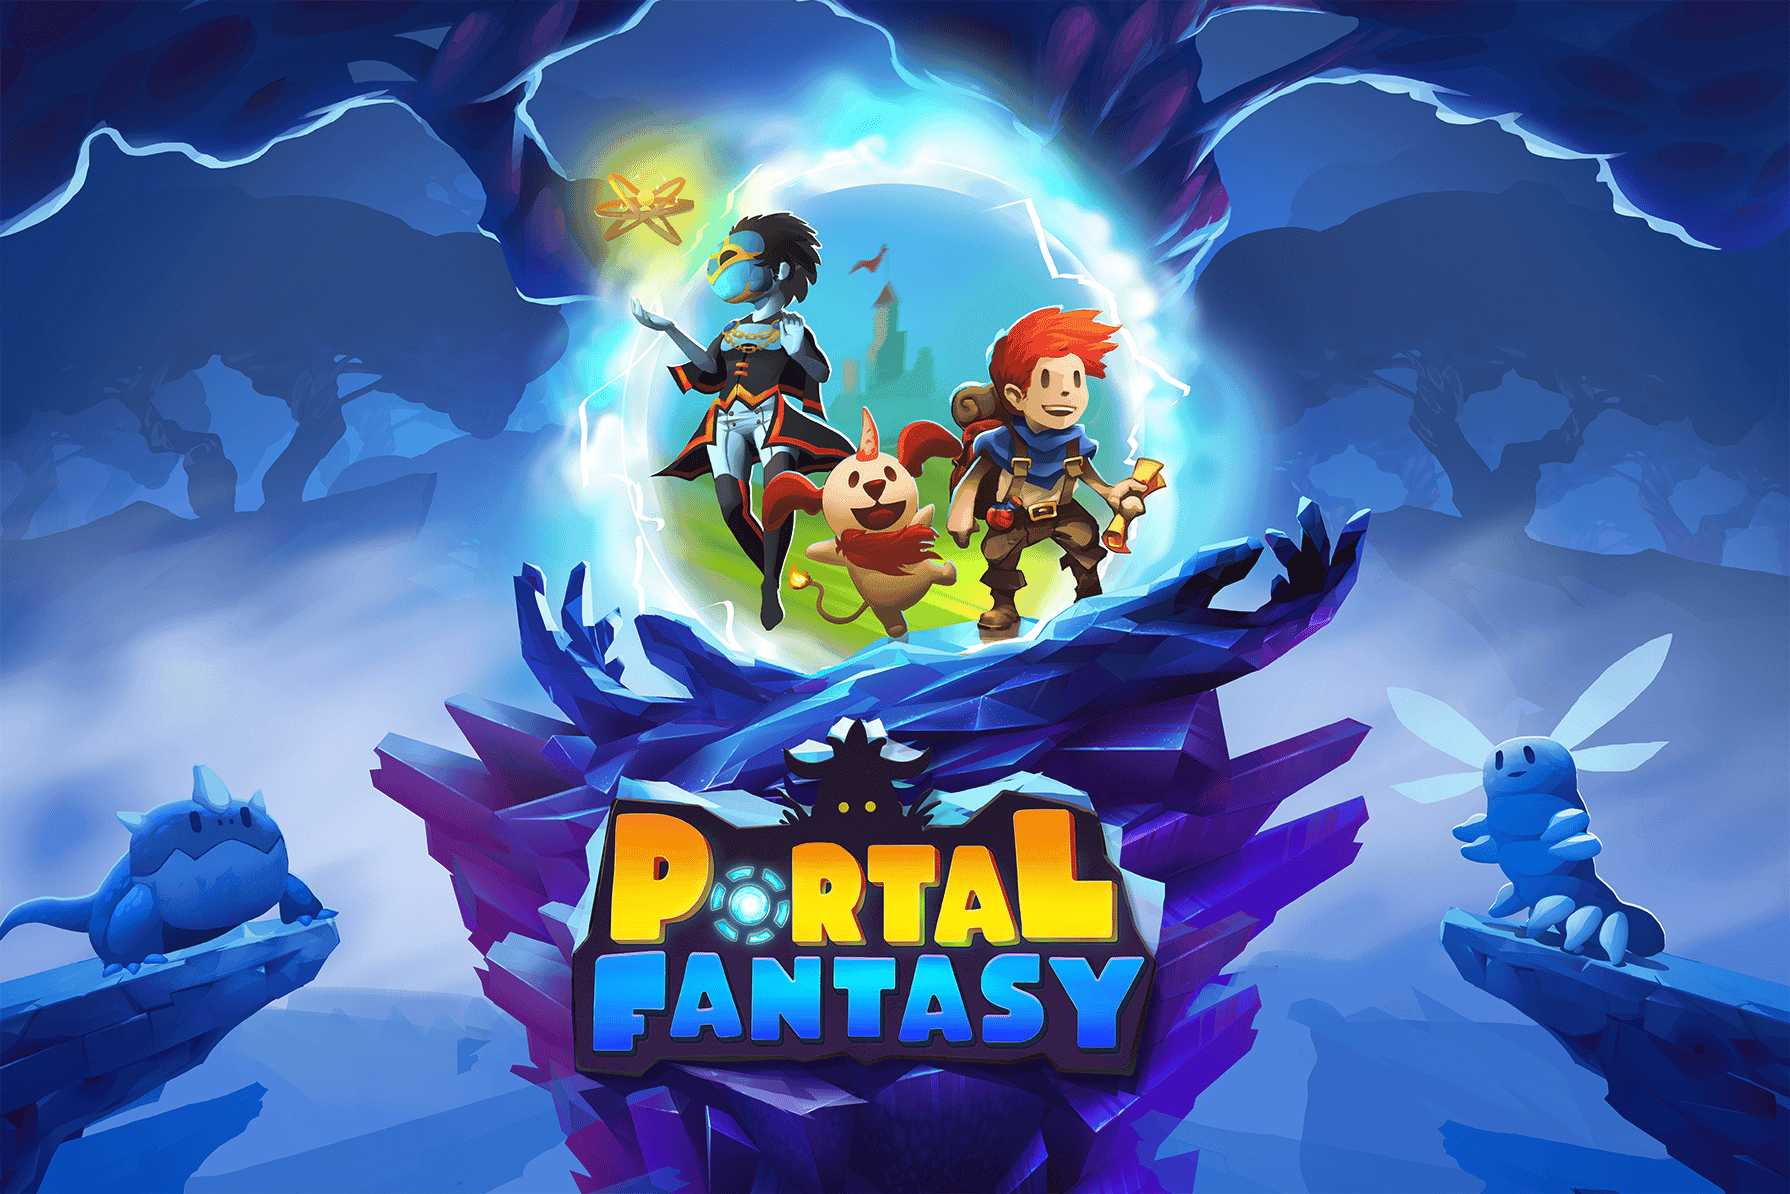 Portal Fantasy - Game Review - Play Games